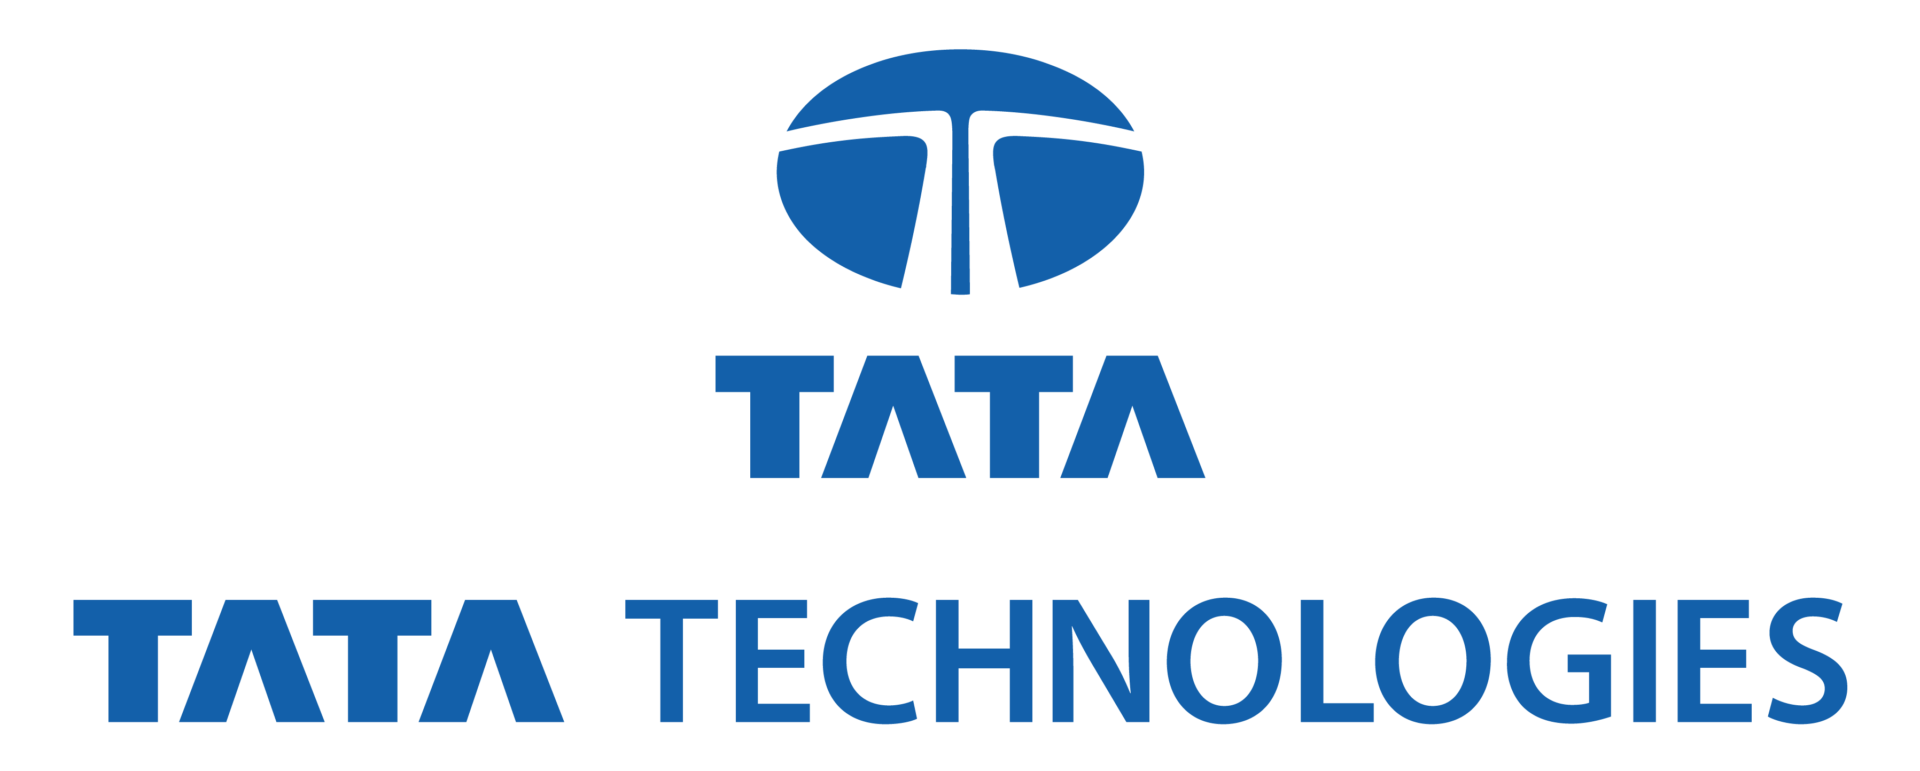 Tata Technologies Joins SOAFEE SIG